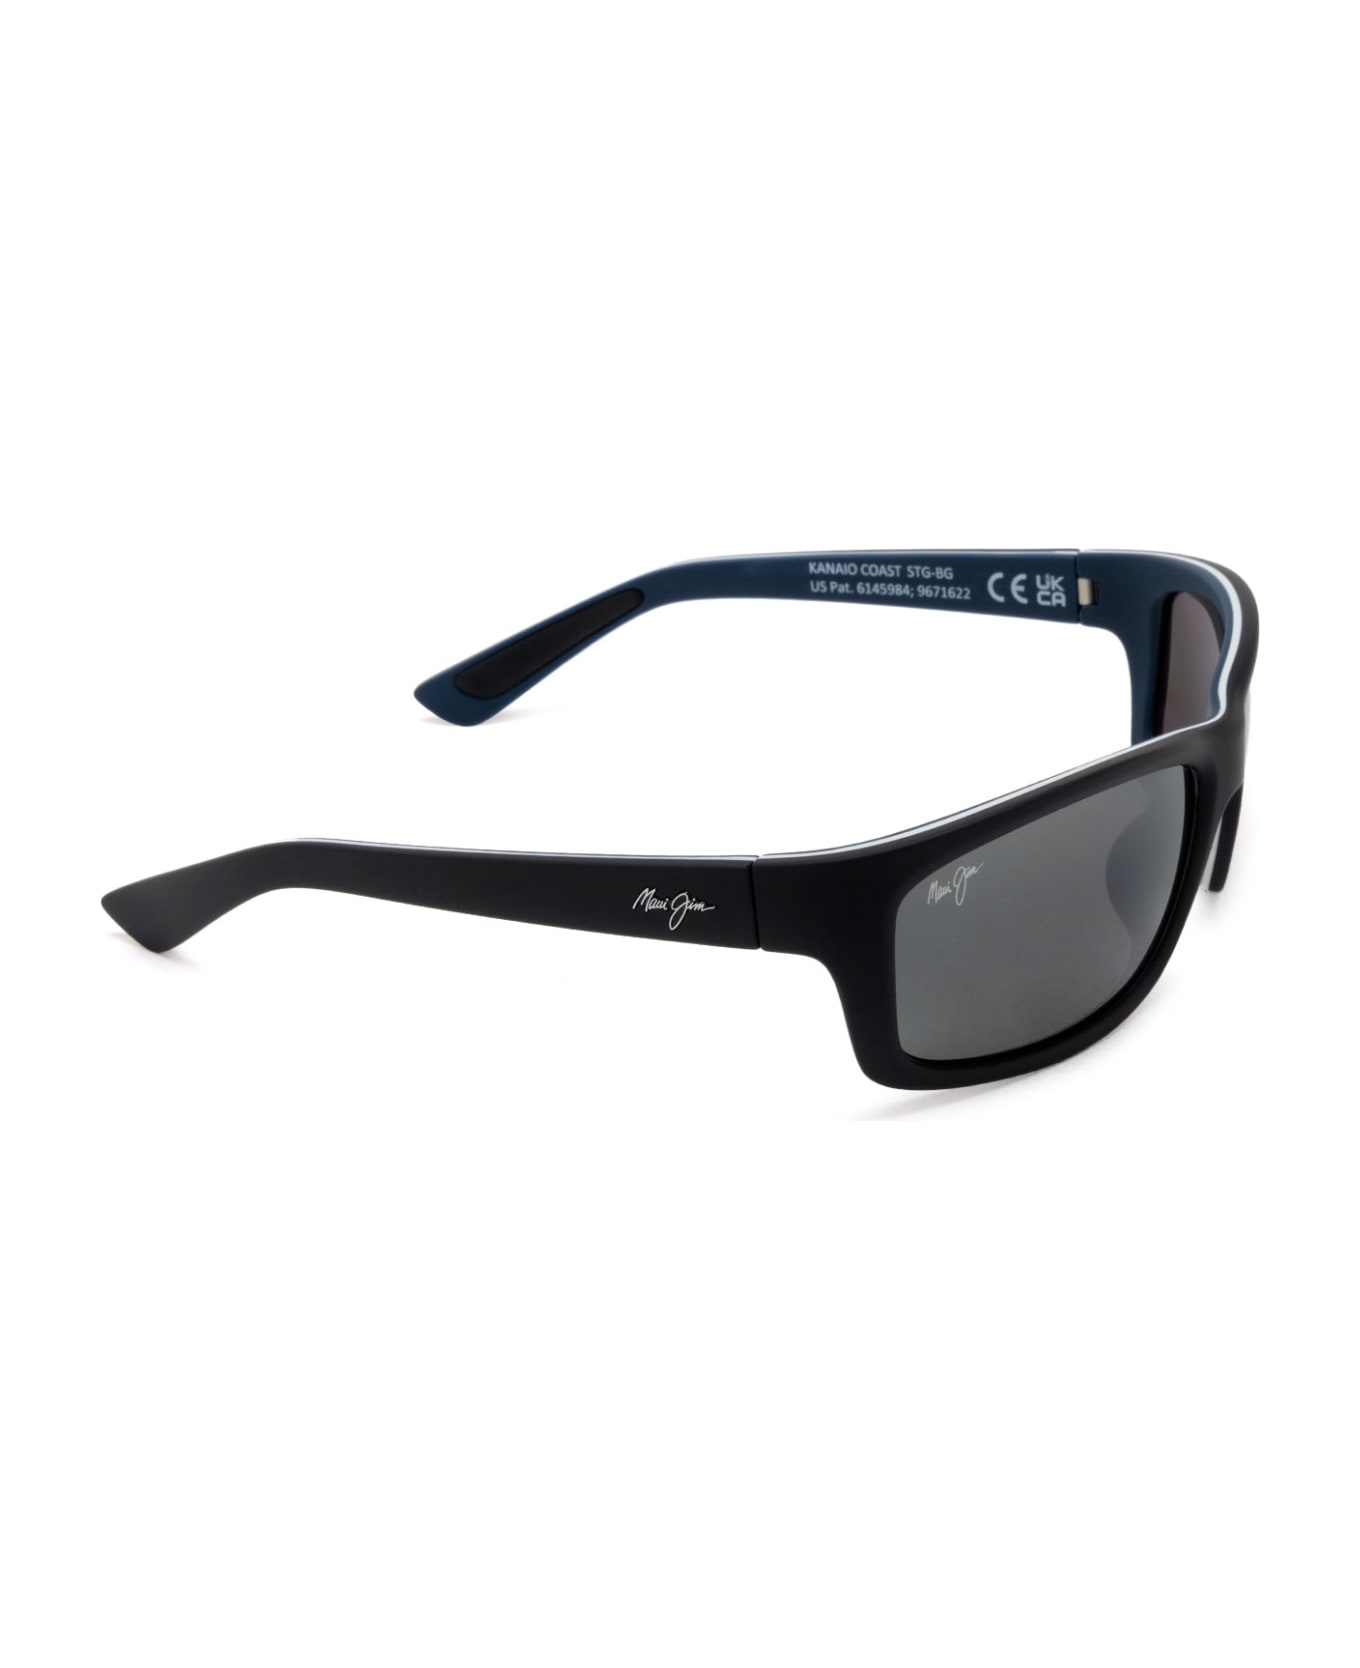 Maui Jim Mj766 Matte Soft Black / White / Blue Sunglasses - Matte Soft Black / White / Blue